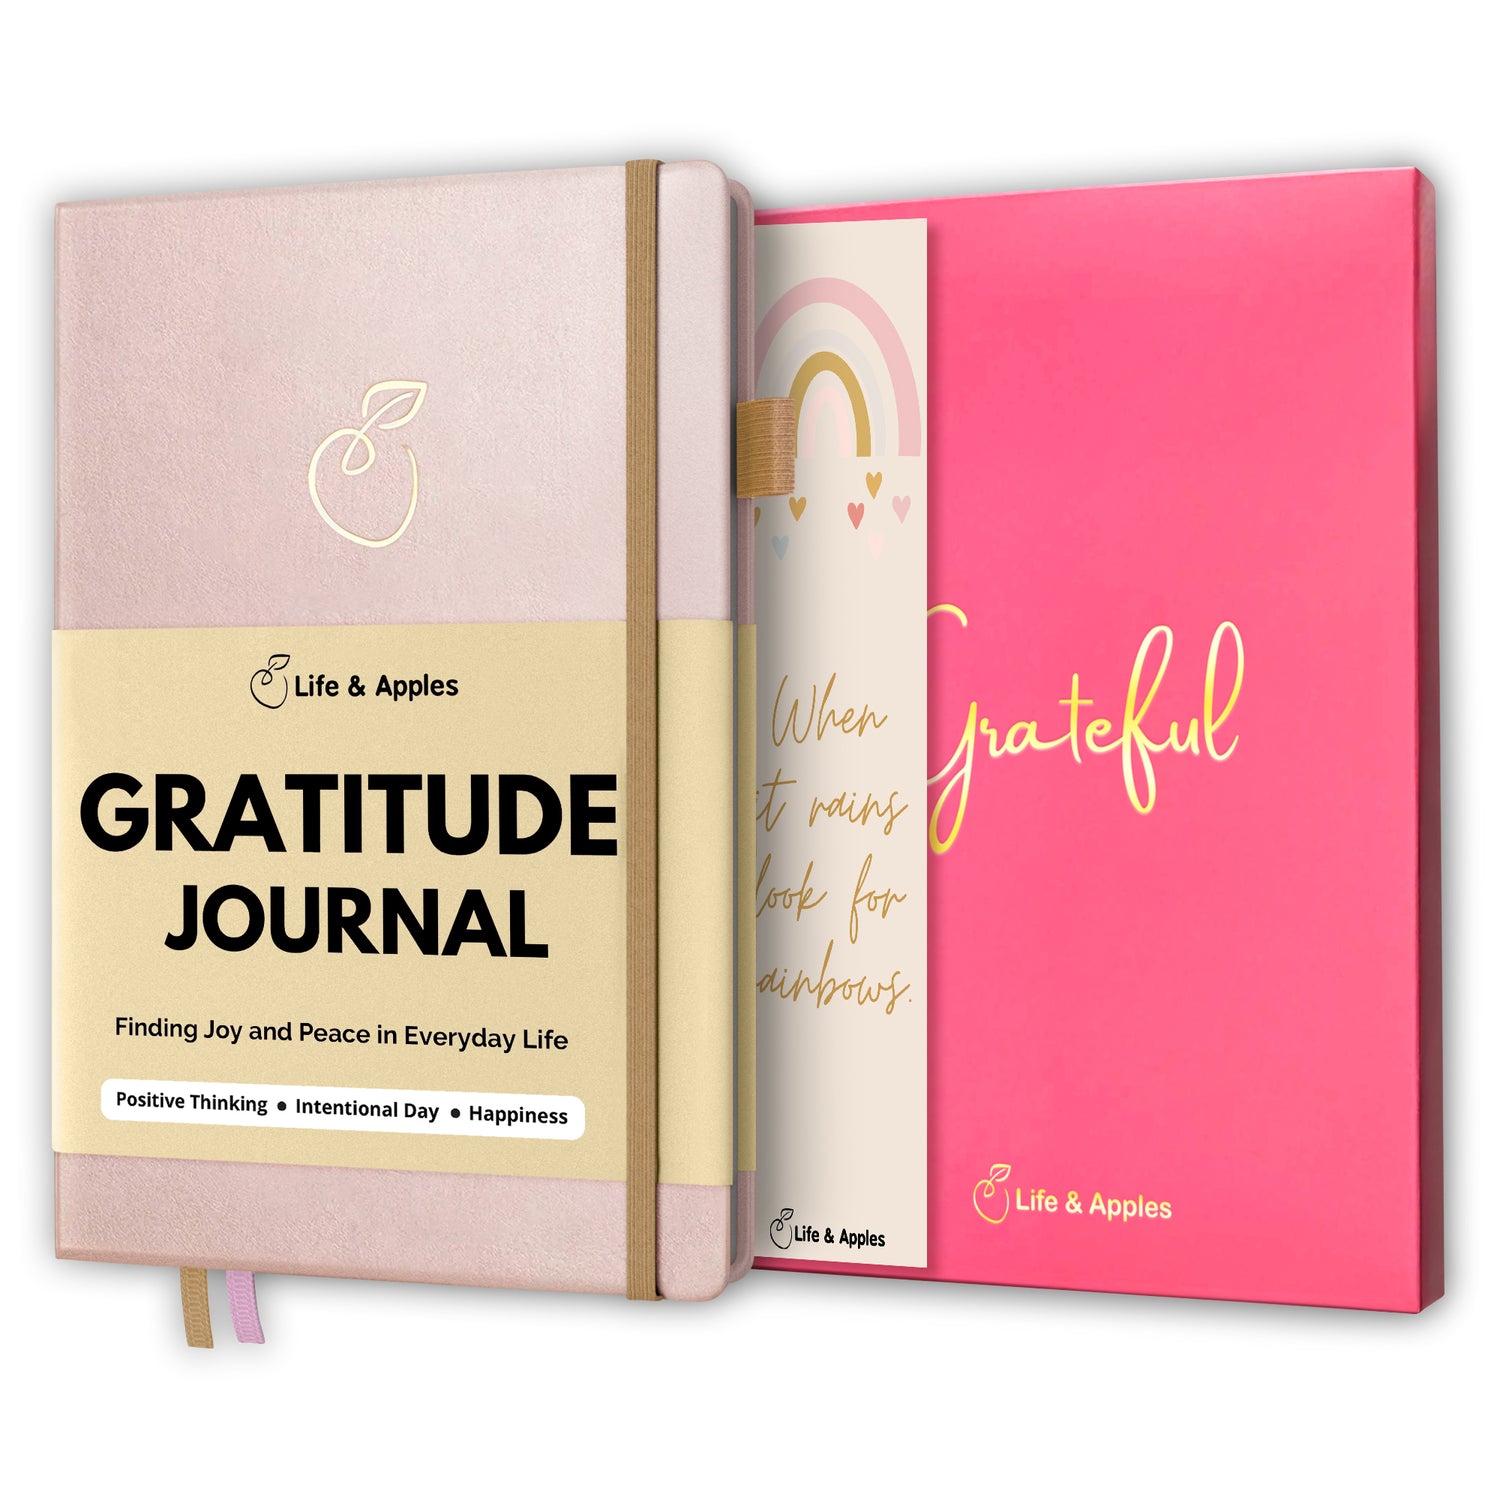 The Gratitude Journal – Life & Apples